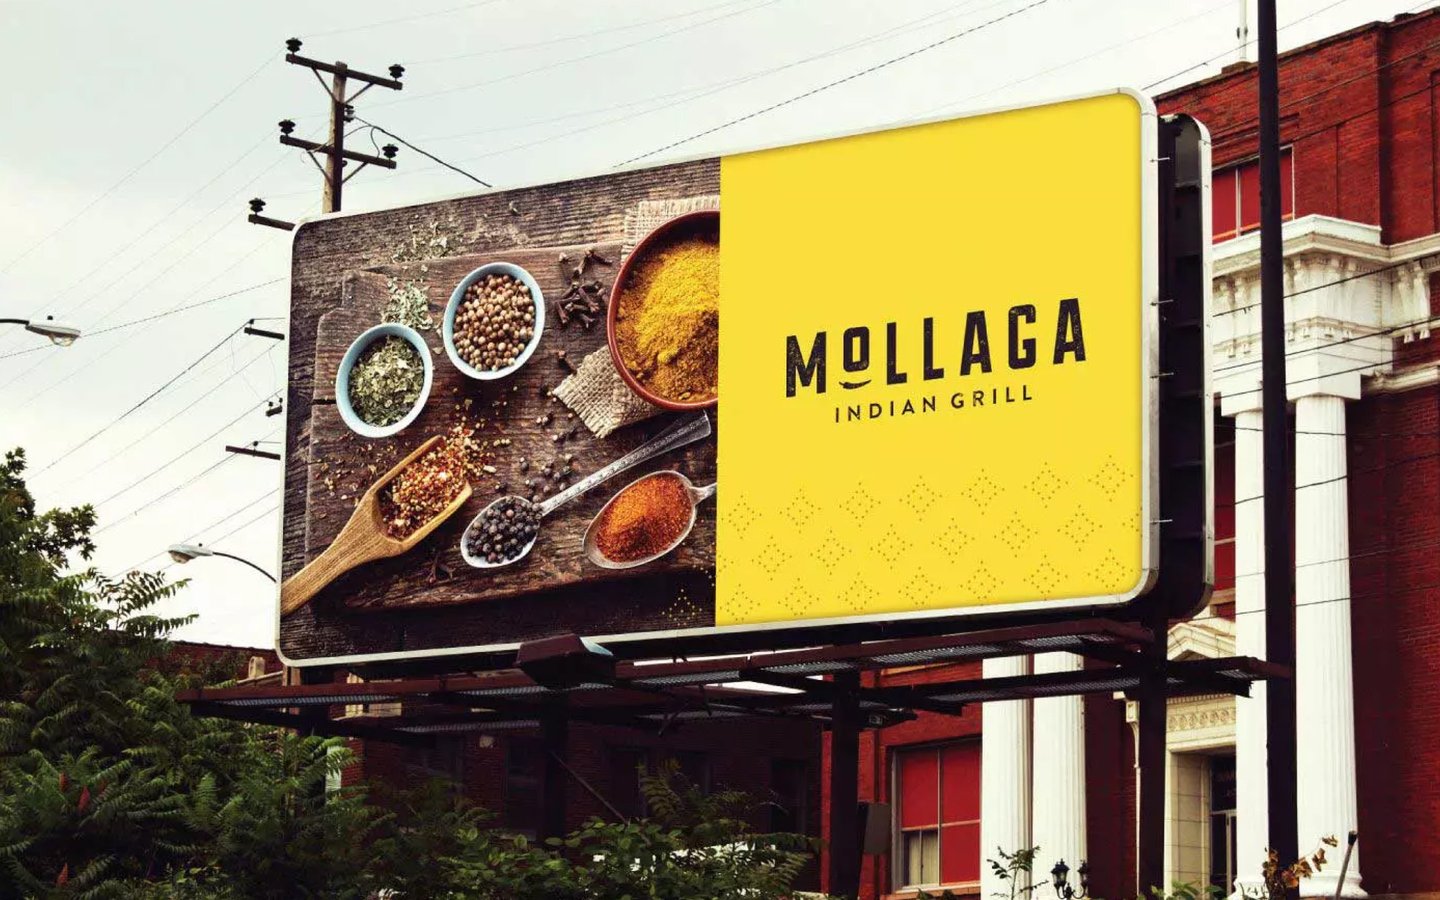 MOLLAGA, INDIAN GRILL